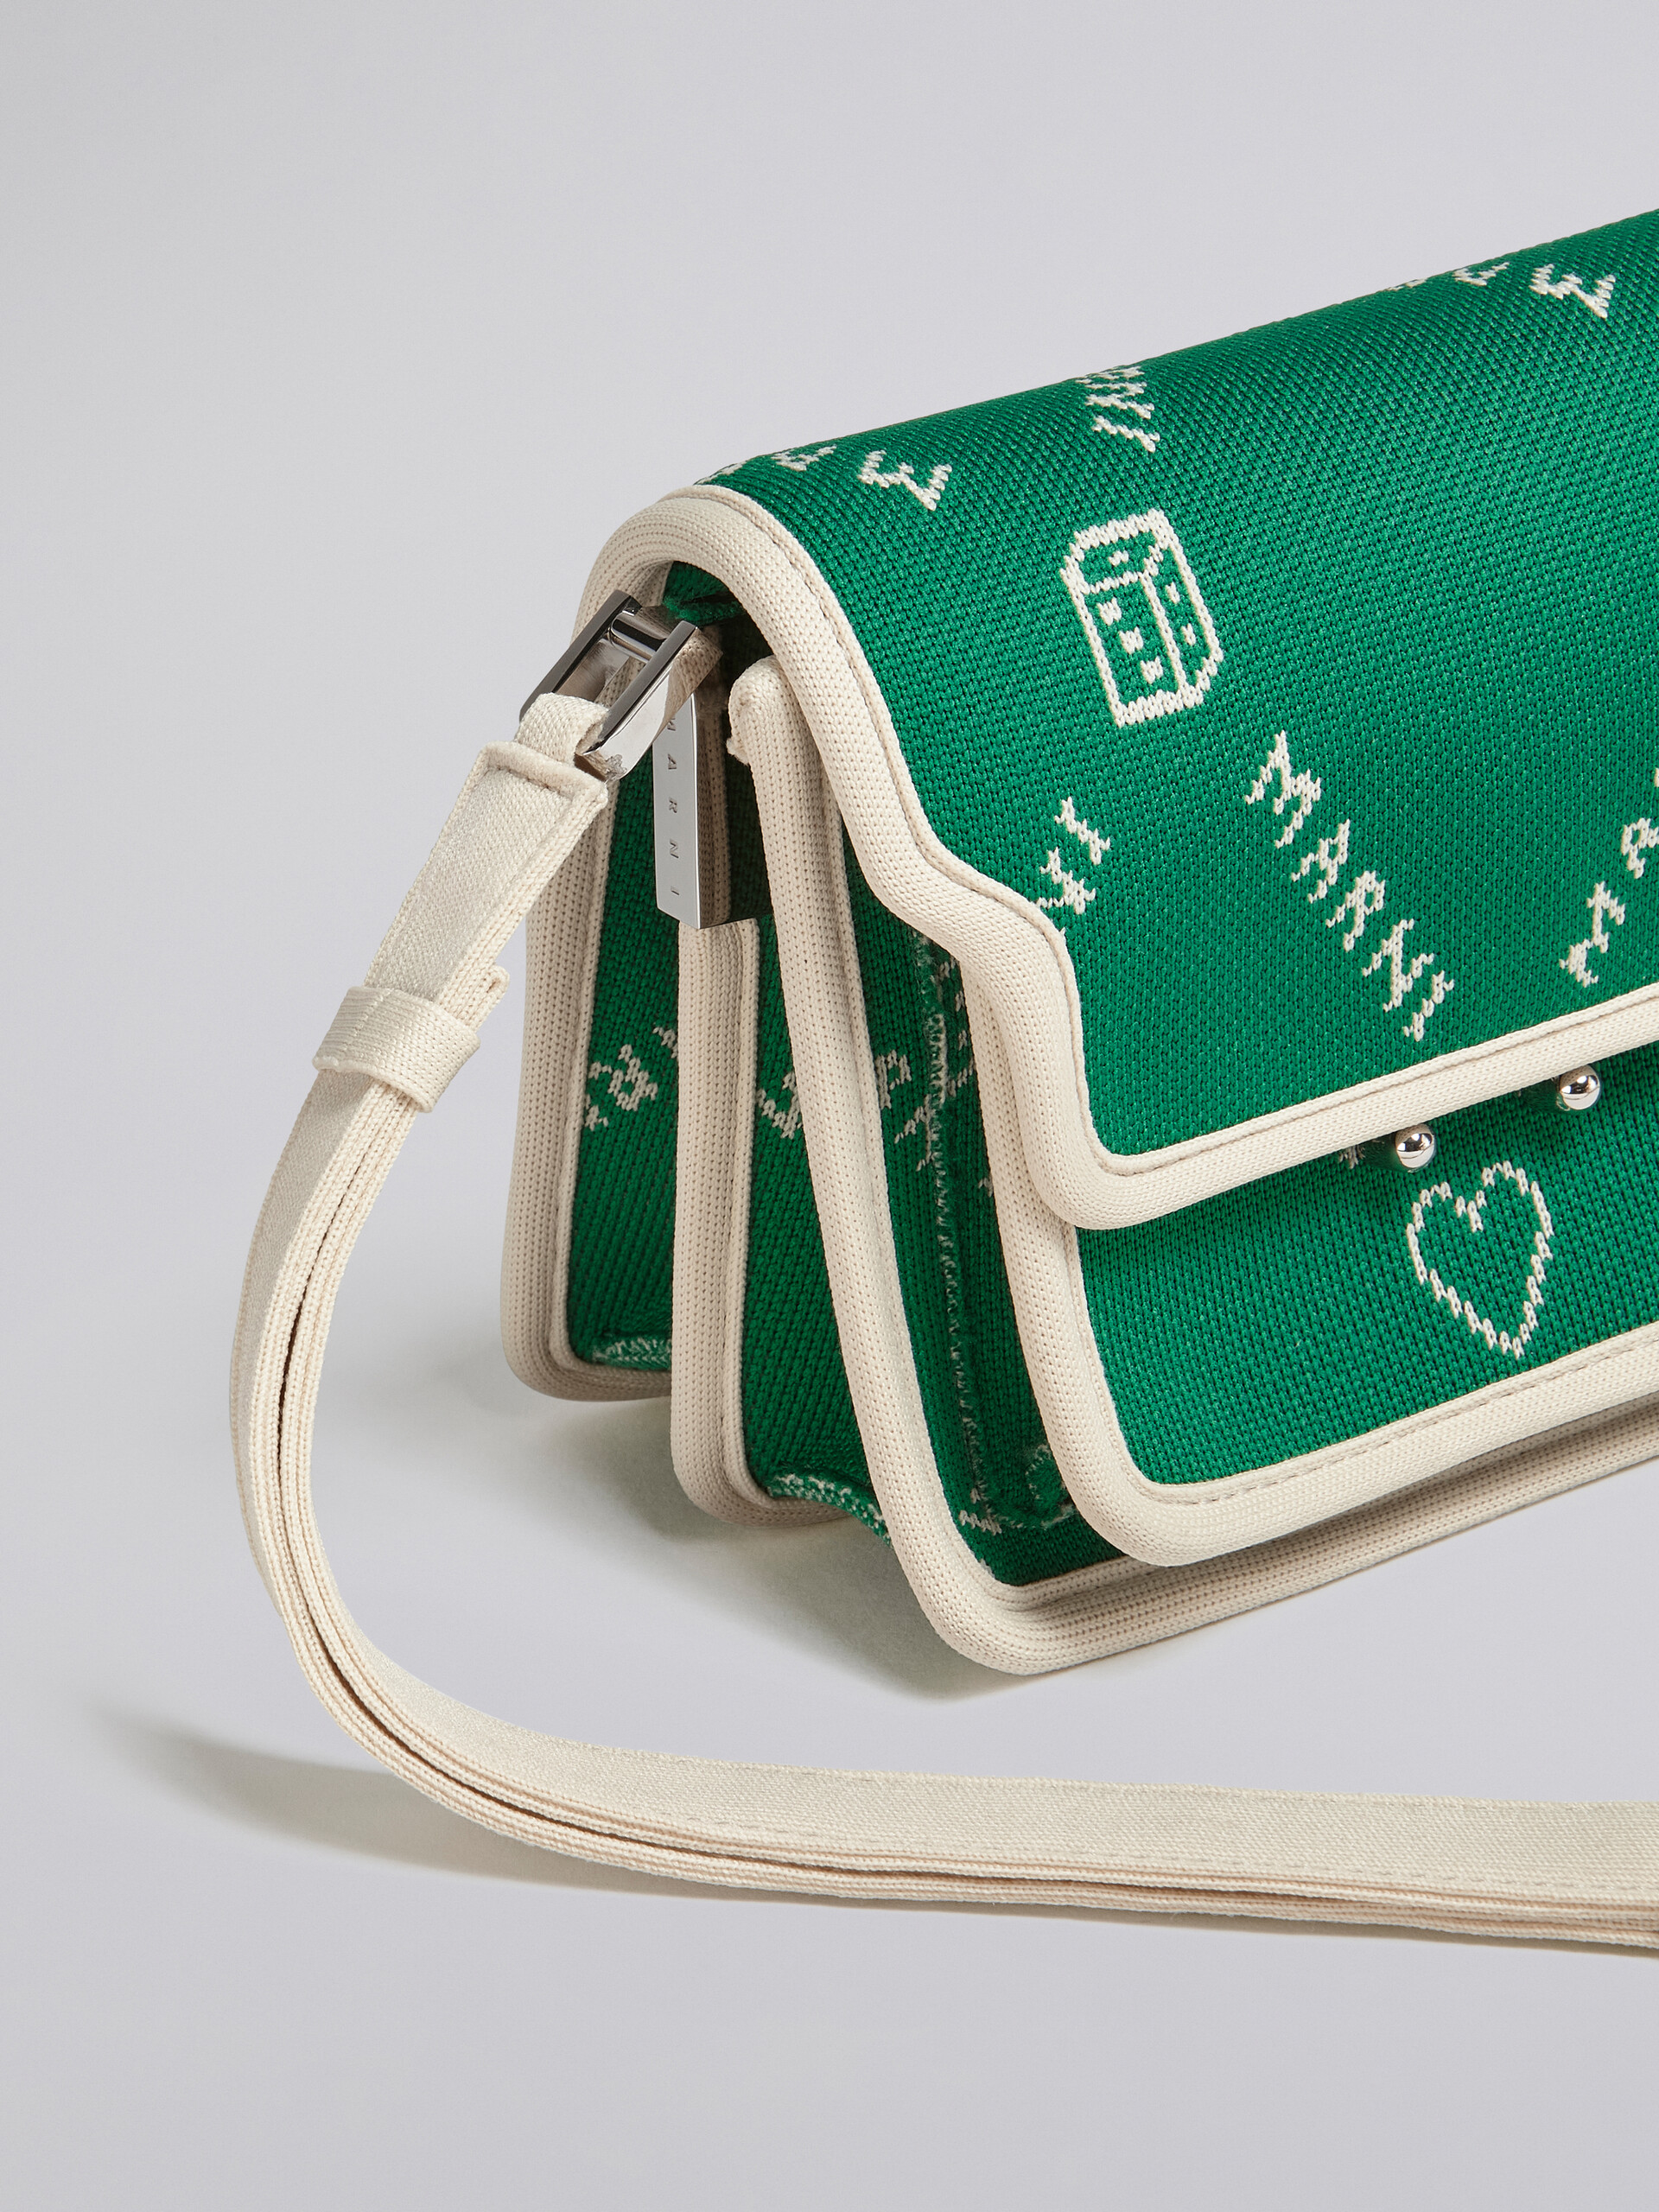 TRUNK SOFT mini bag in green Marnigram jacquard - Shoulder Bag - Image 5